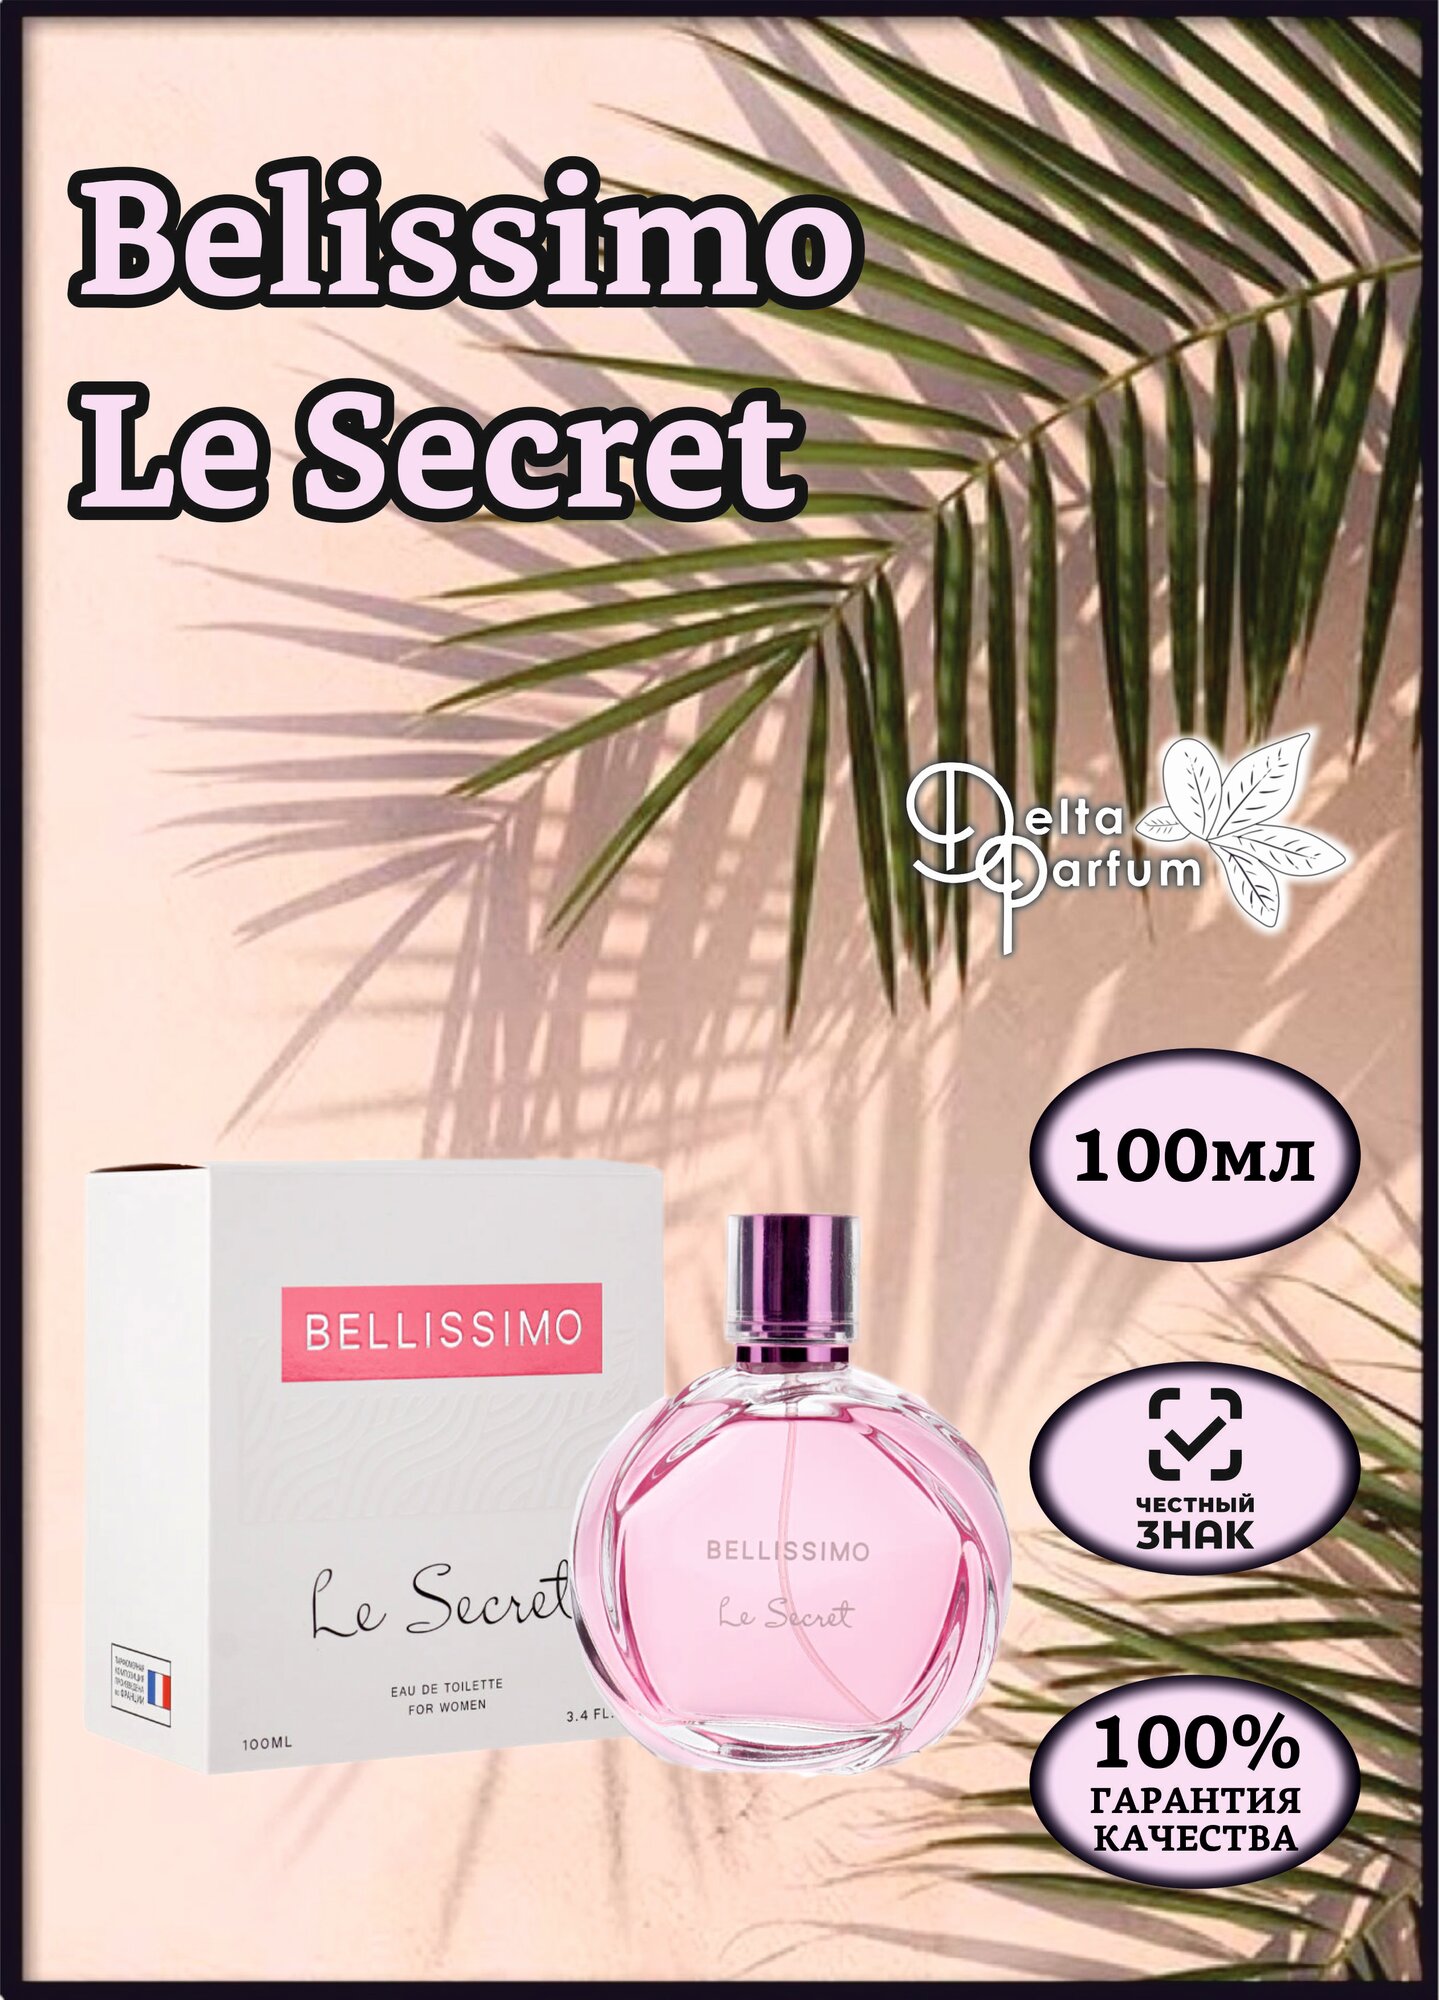 Delta parfum (Iren Adler) Туалетная вода женская Bellissimo Le Secret, 100мл